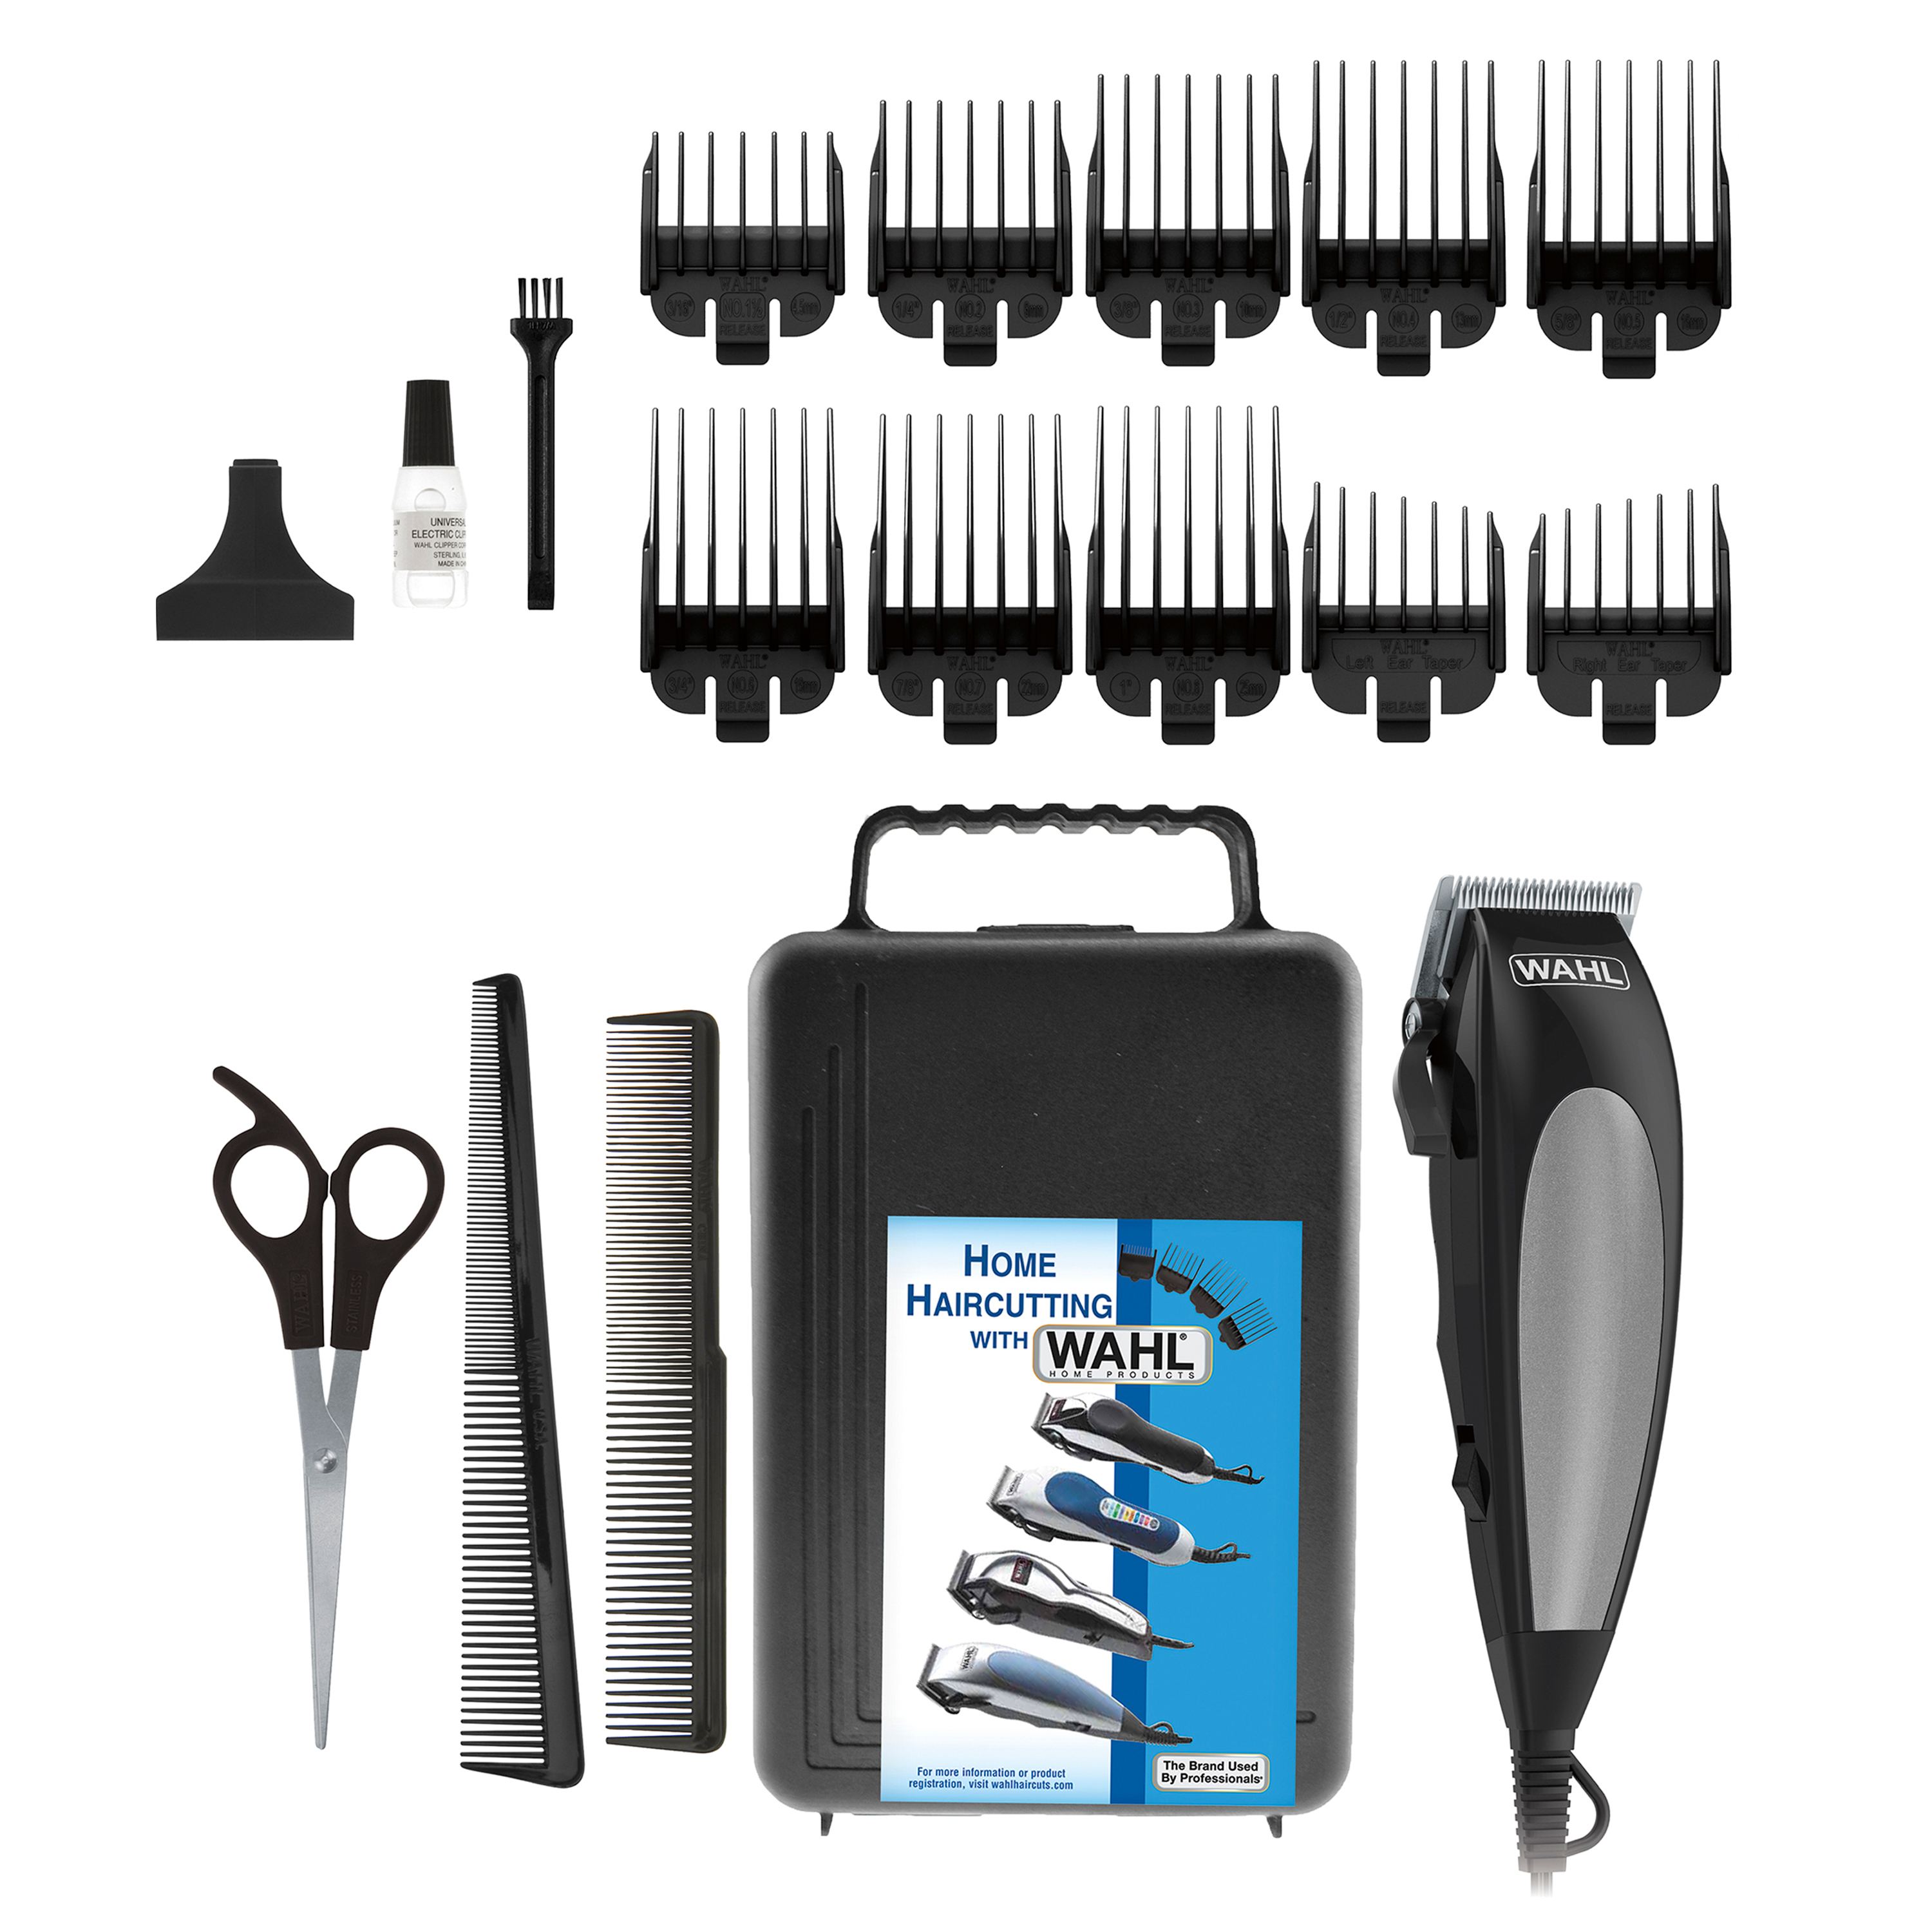 Wahl HomeCut Travel Size Male Hair Cutting Kit, Black, 18 Piece Set  9243-2301 - image 1 of 9